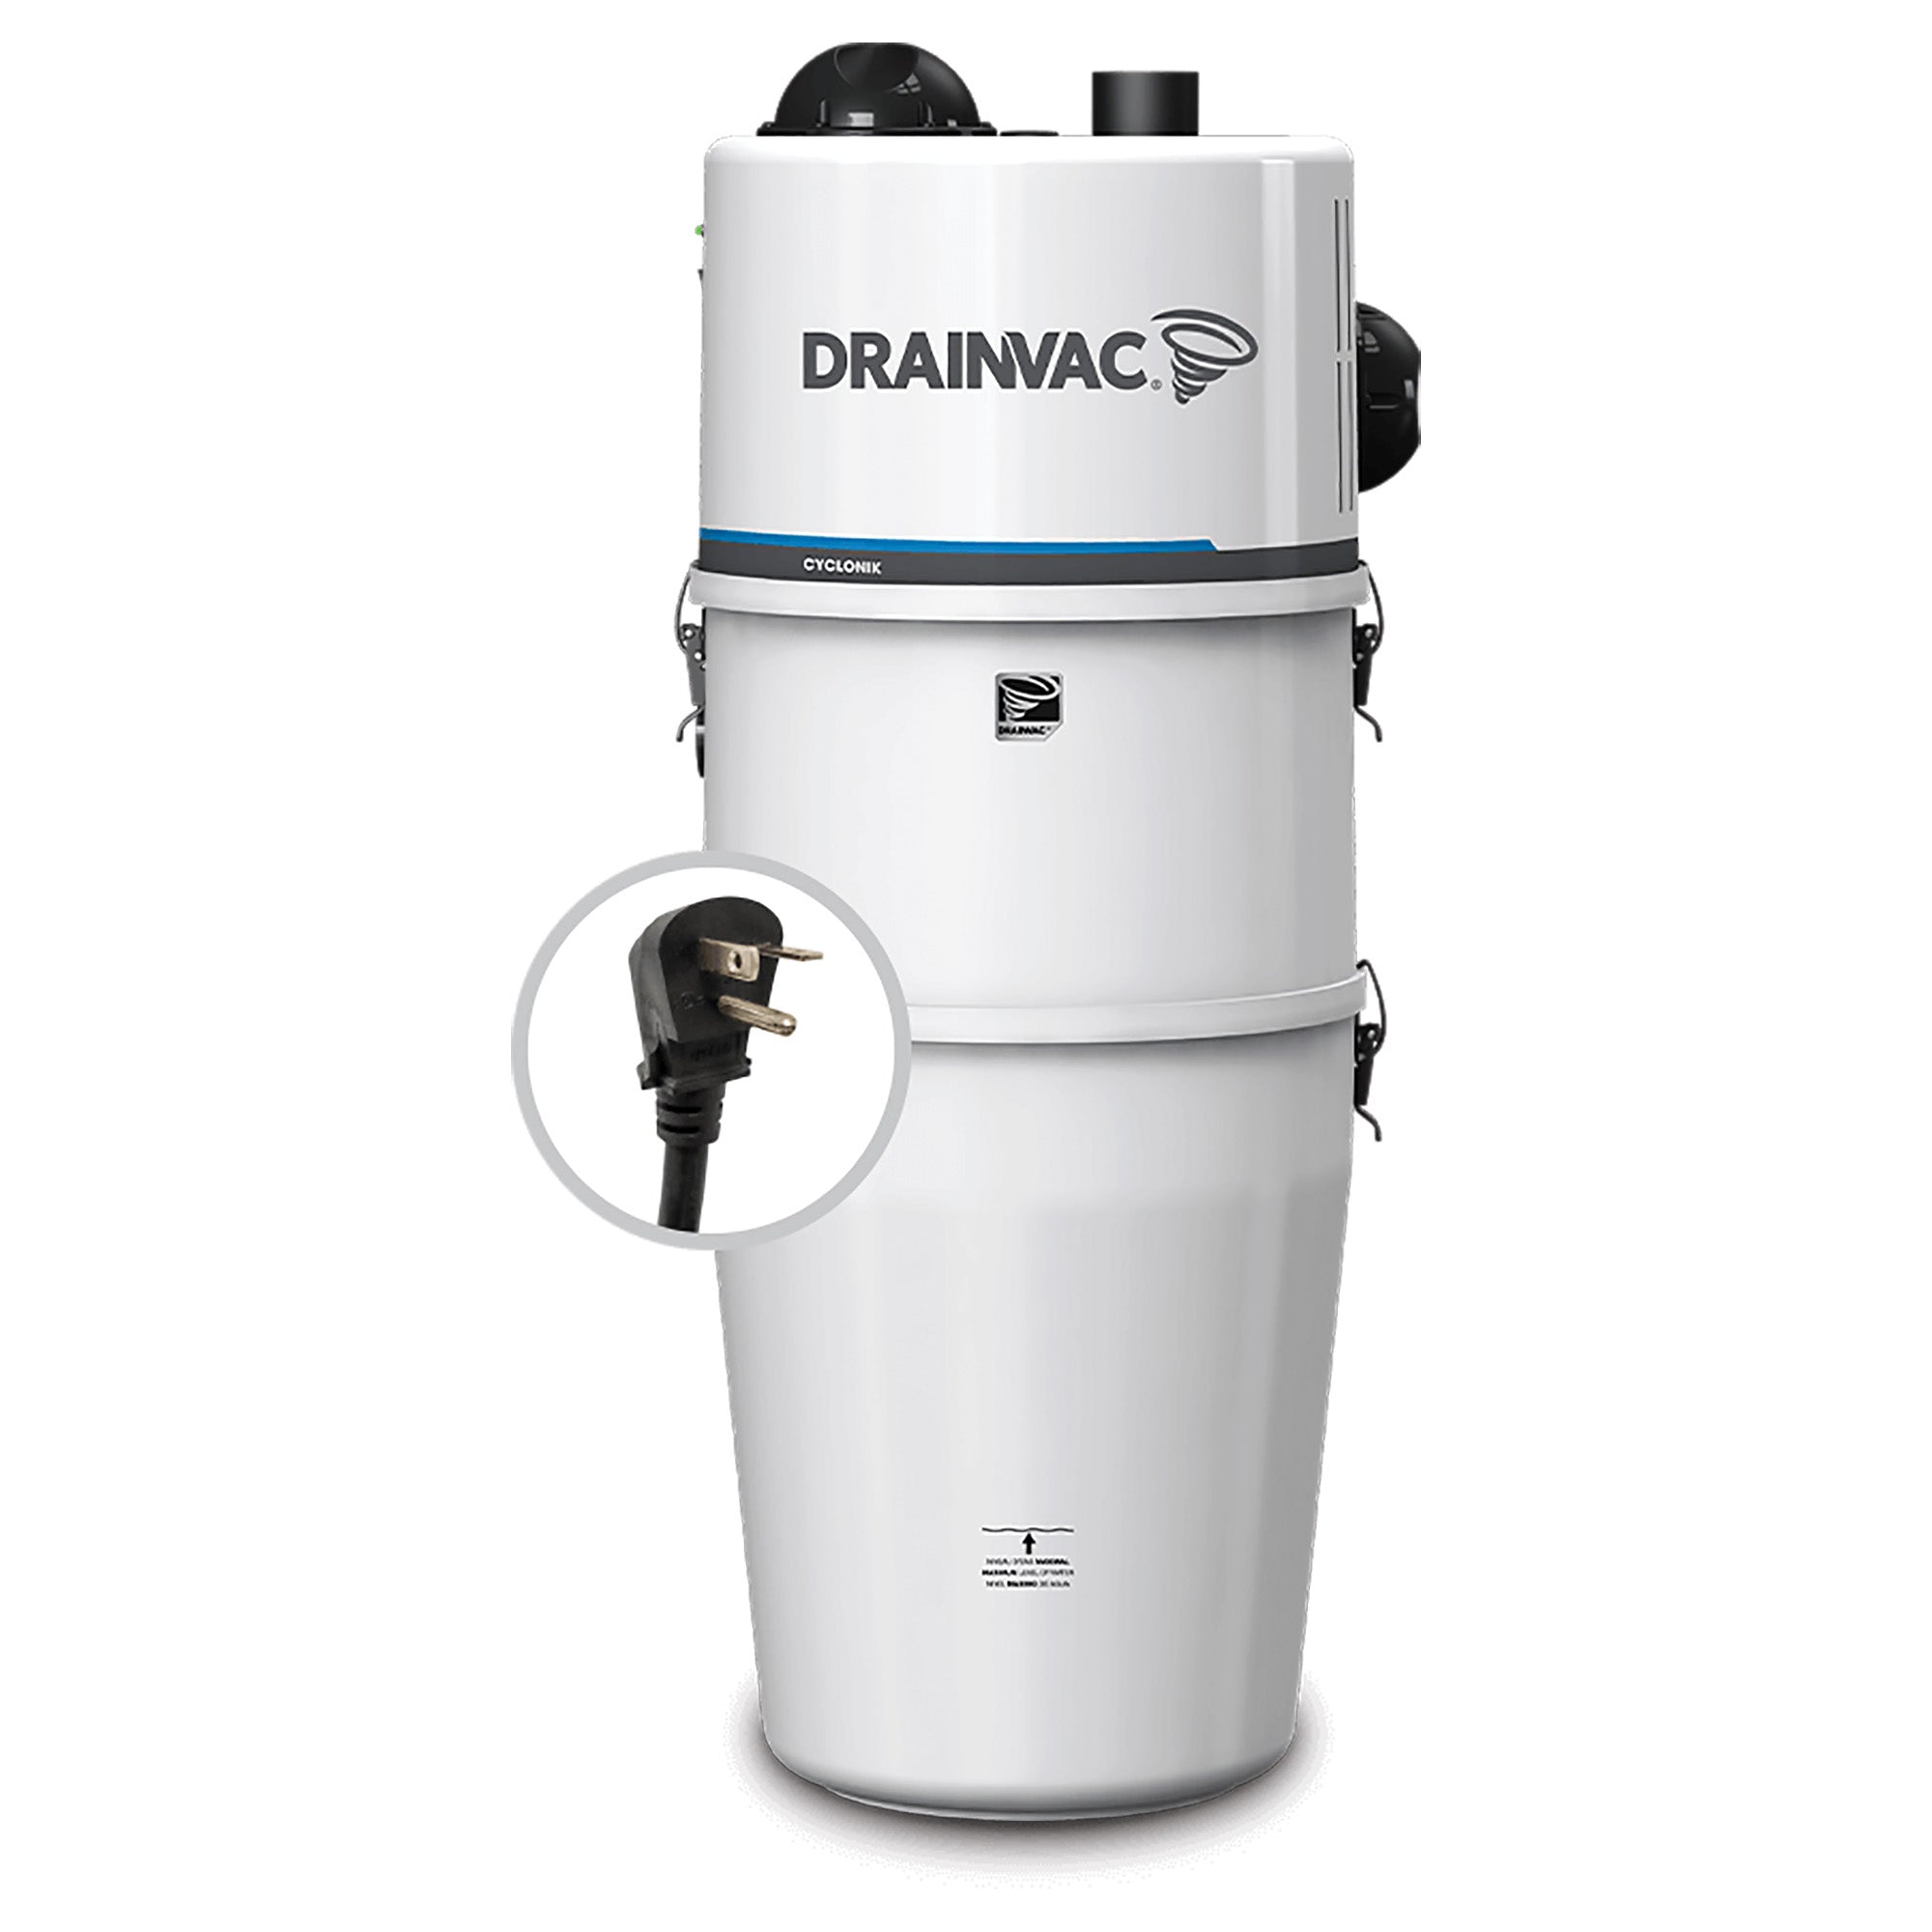 DrainVac DV1R15-CT Cyclonik Central Vacuum - 2x355 Air Watts with Cartridge Filter